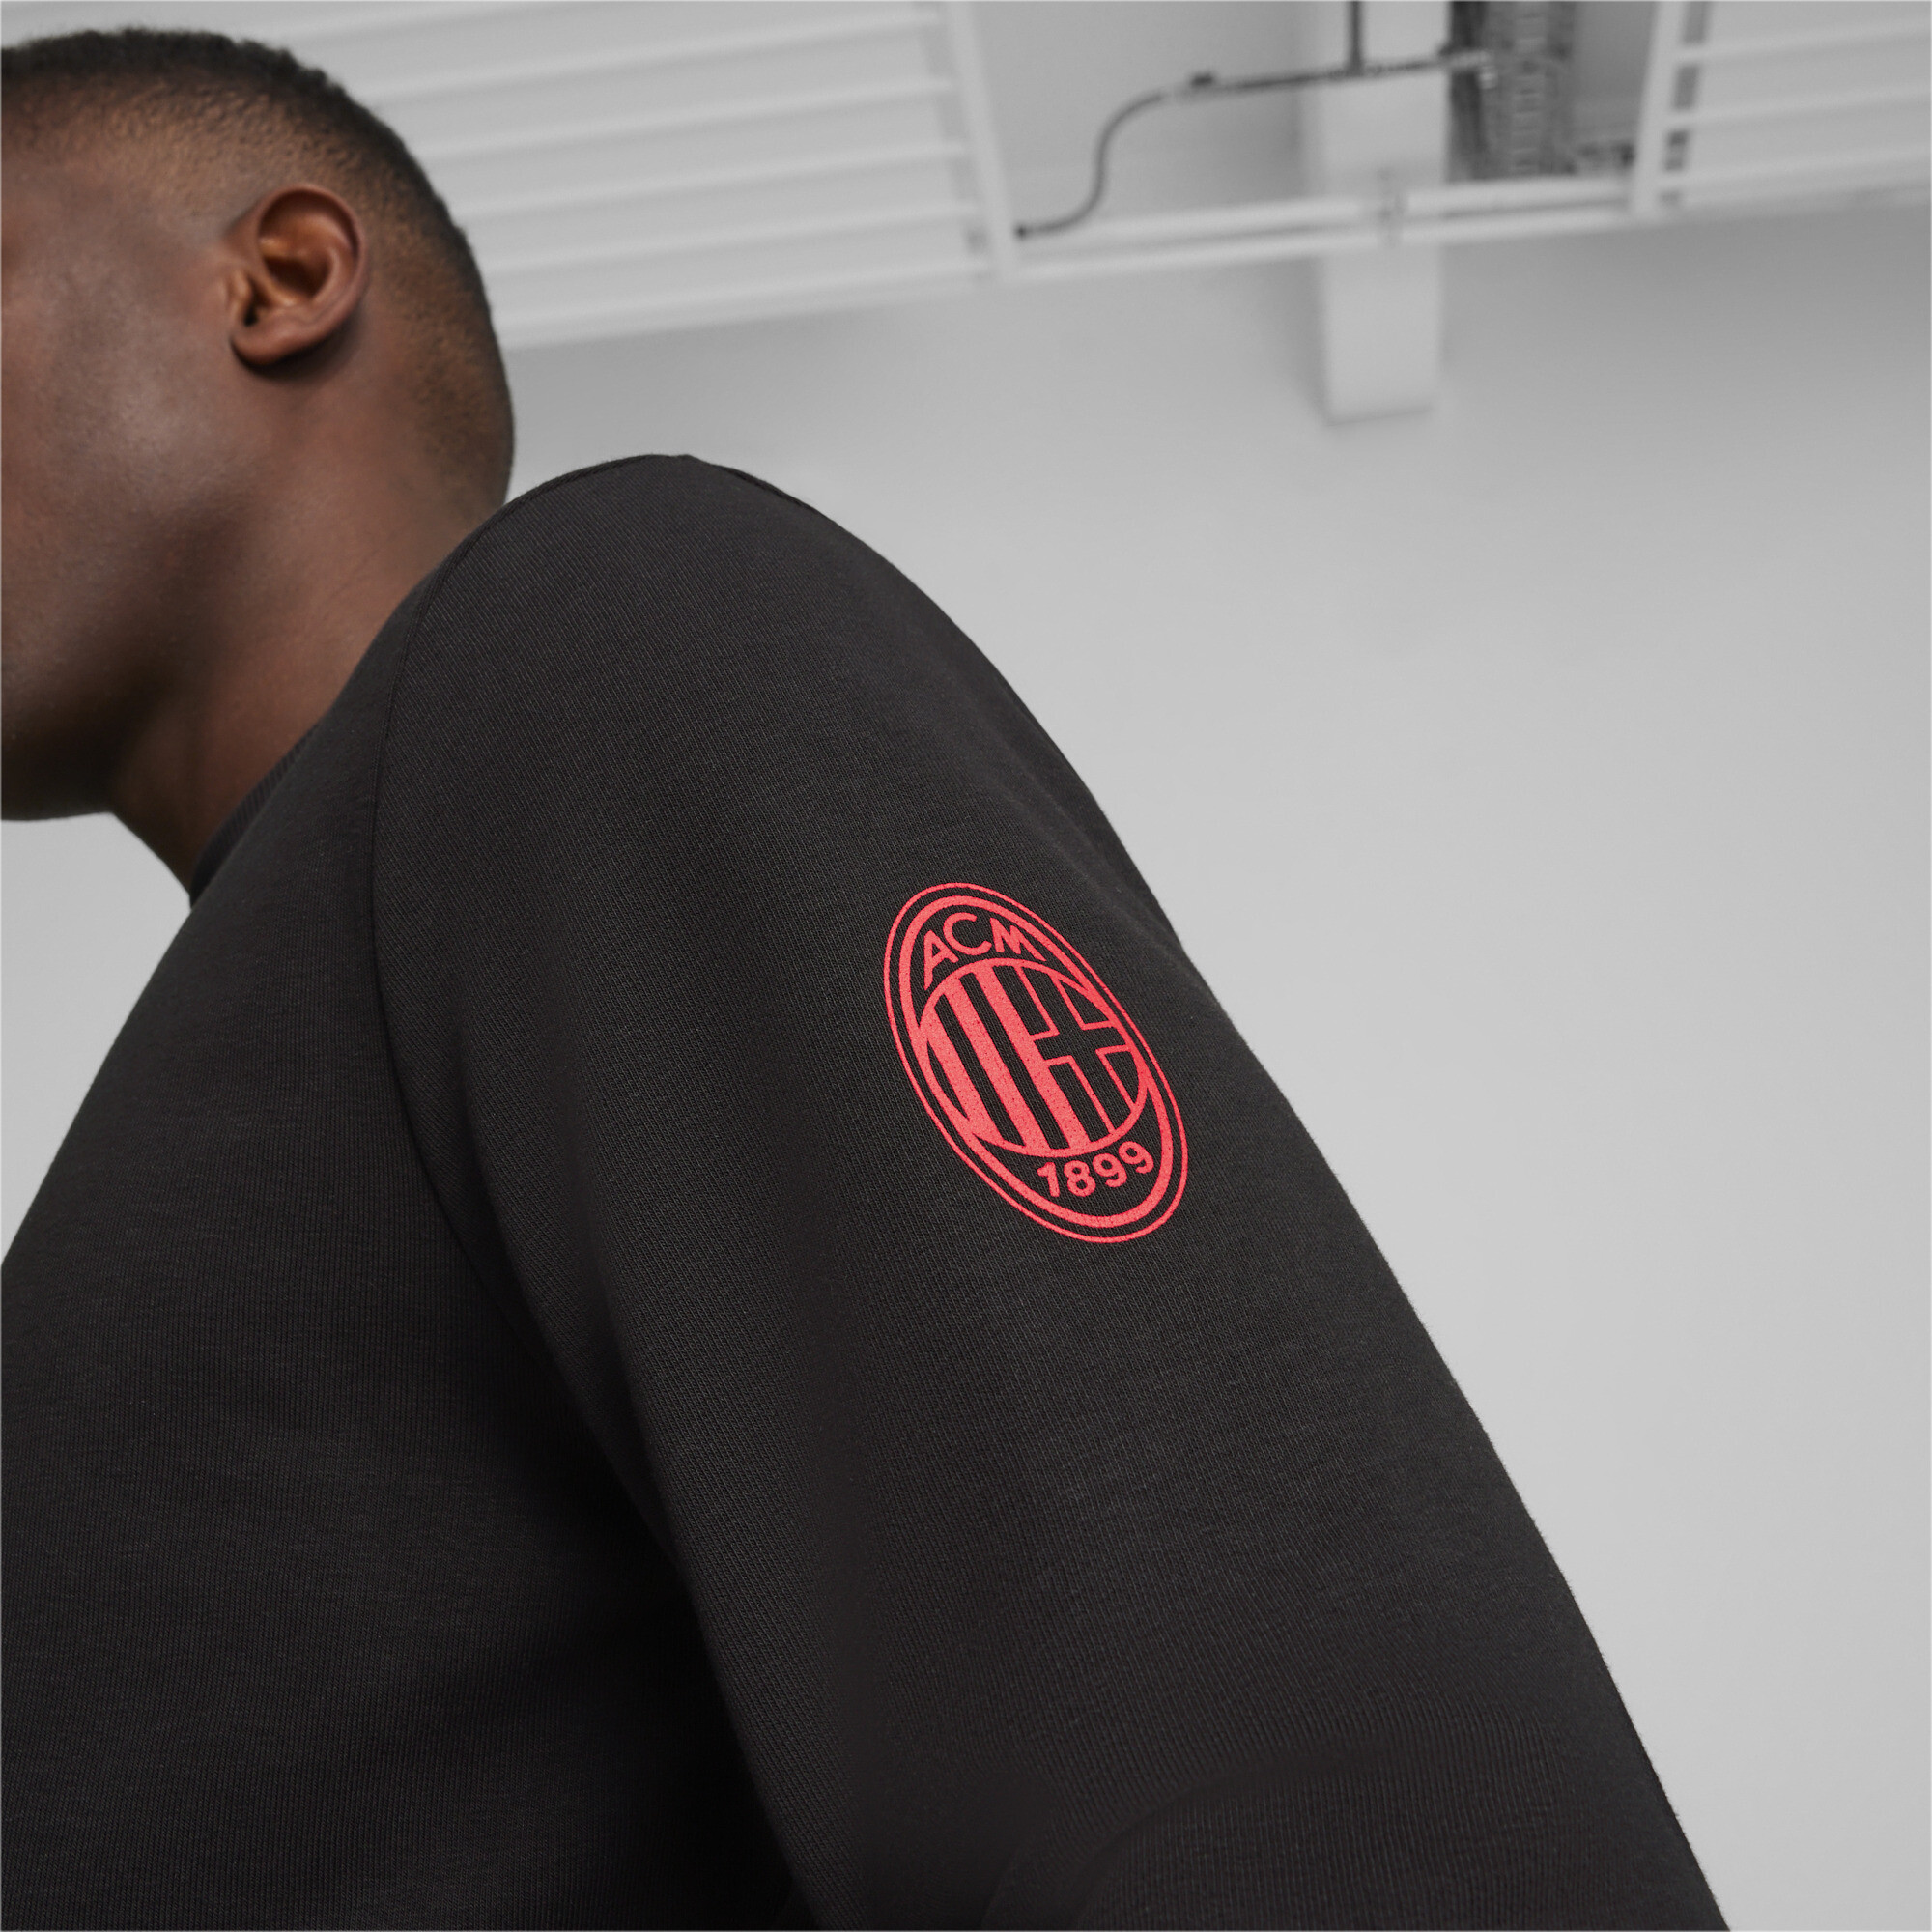 Men's Puma AC Milan Ftblicons Sweatshirt, Black, Size XL, Sport